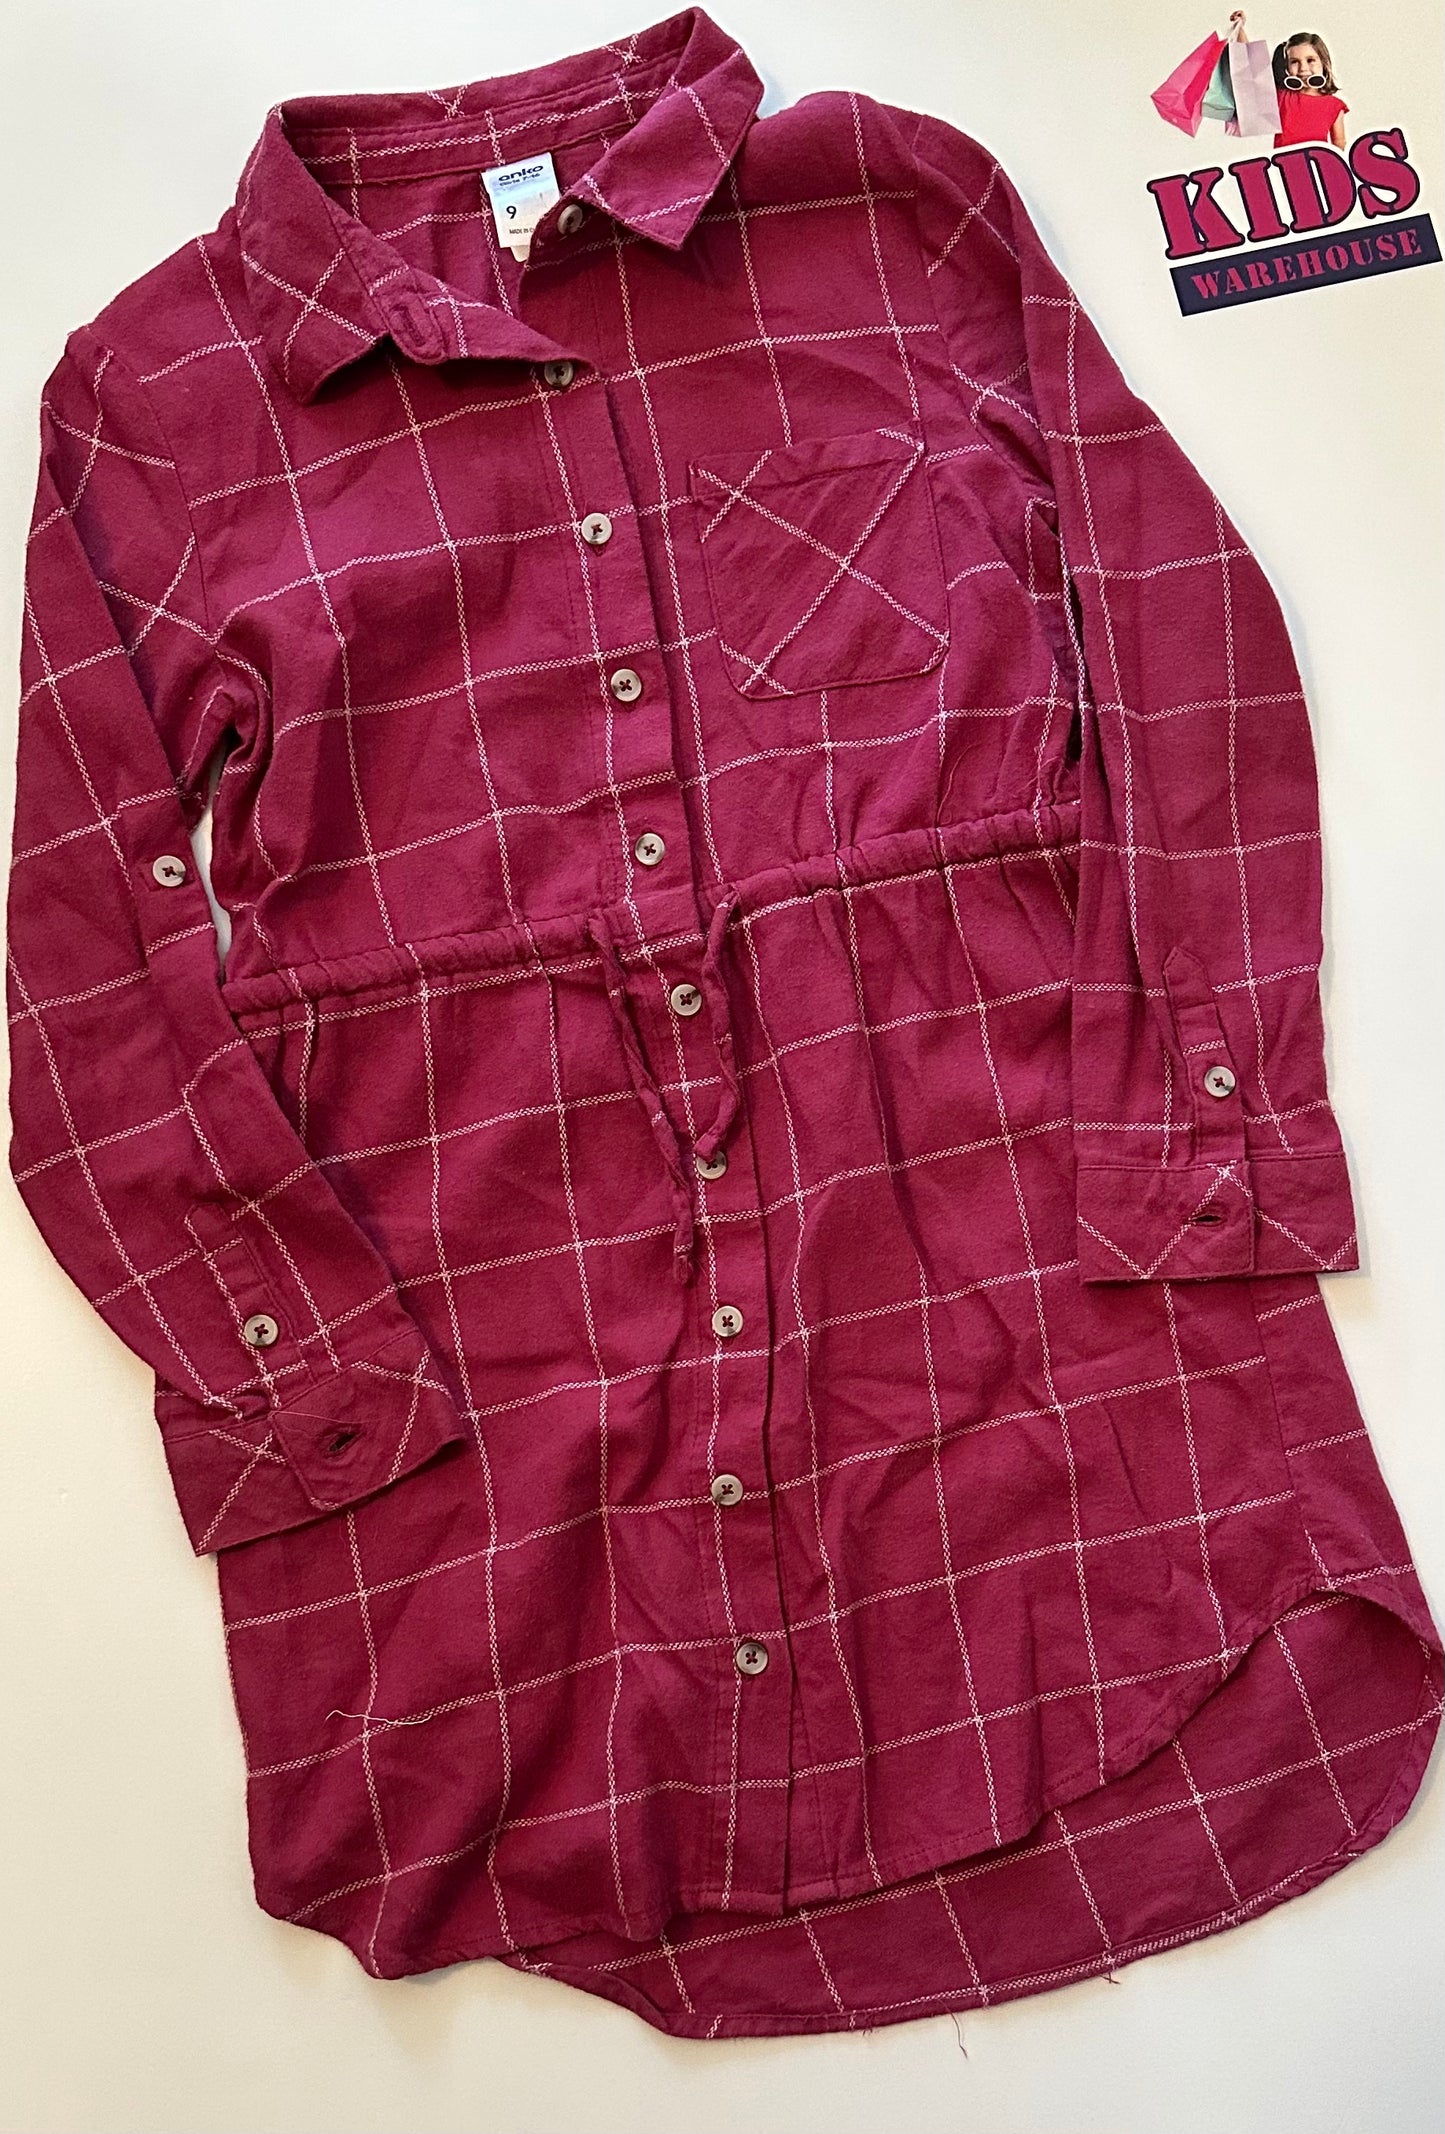 Winter Button Up Dress Size 9 – Kids Warehouse AU